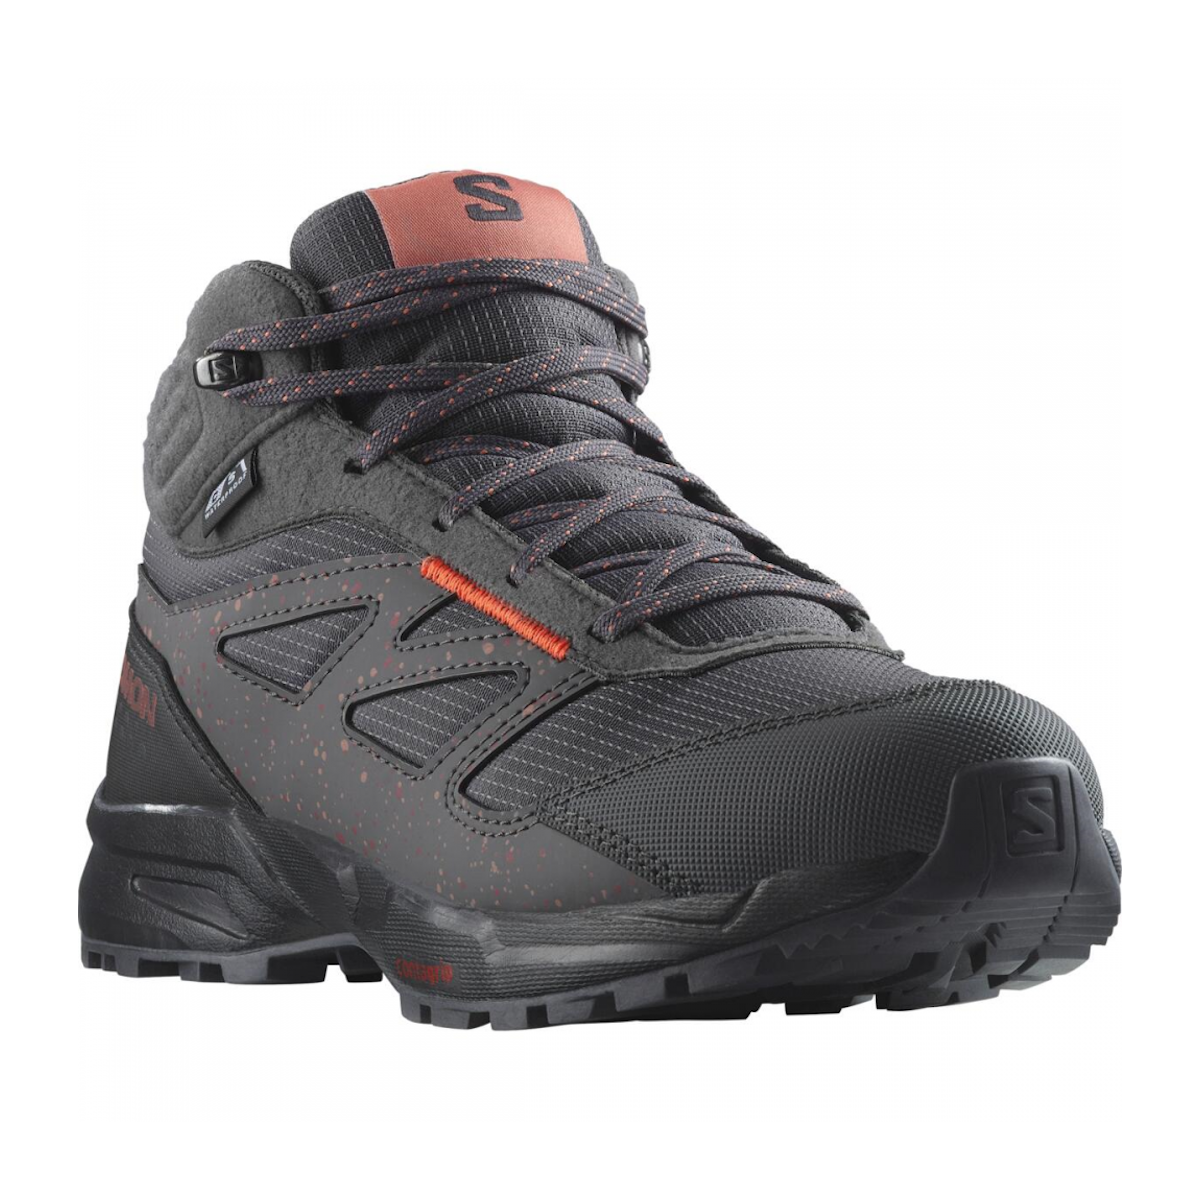 SALOMON OUTWAY MID CSWP J hiking shoes - black/grey/peach